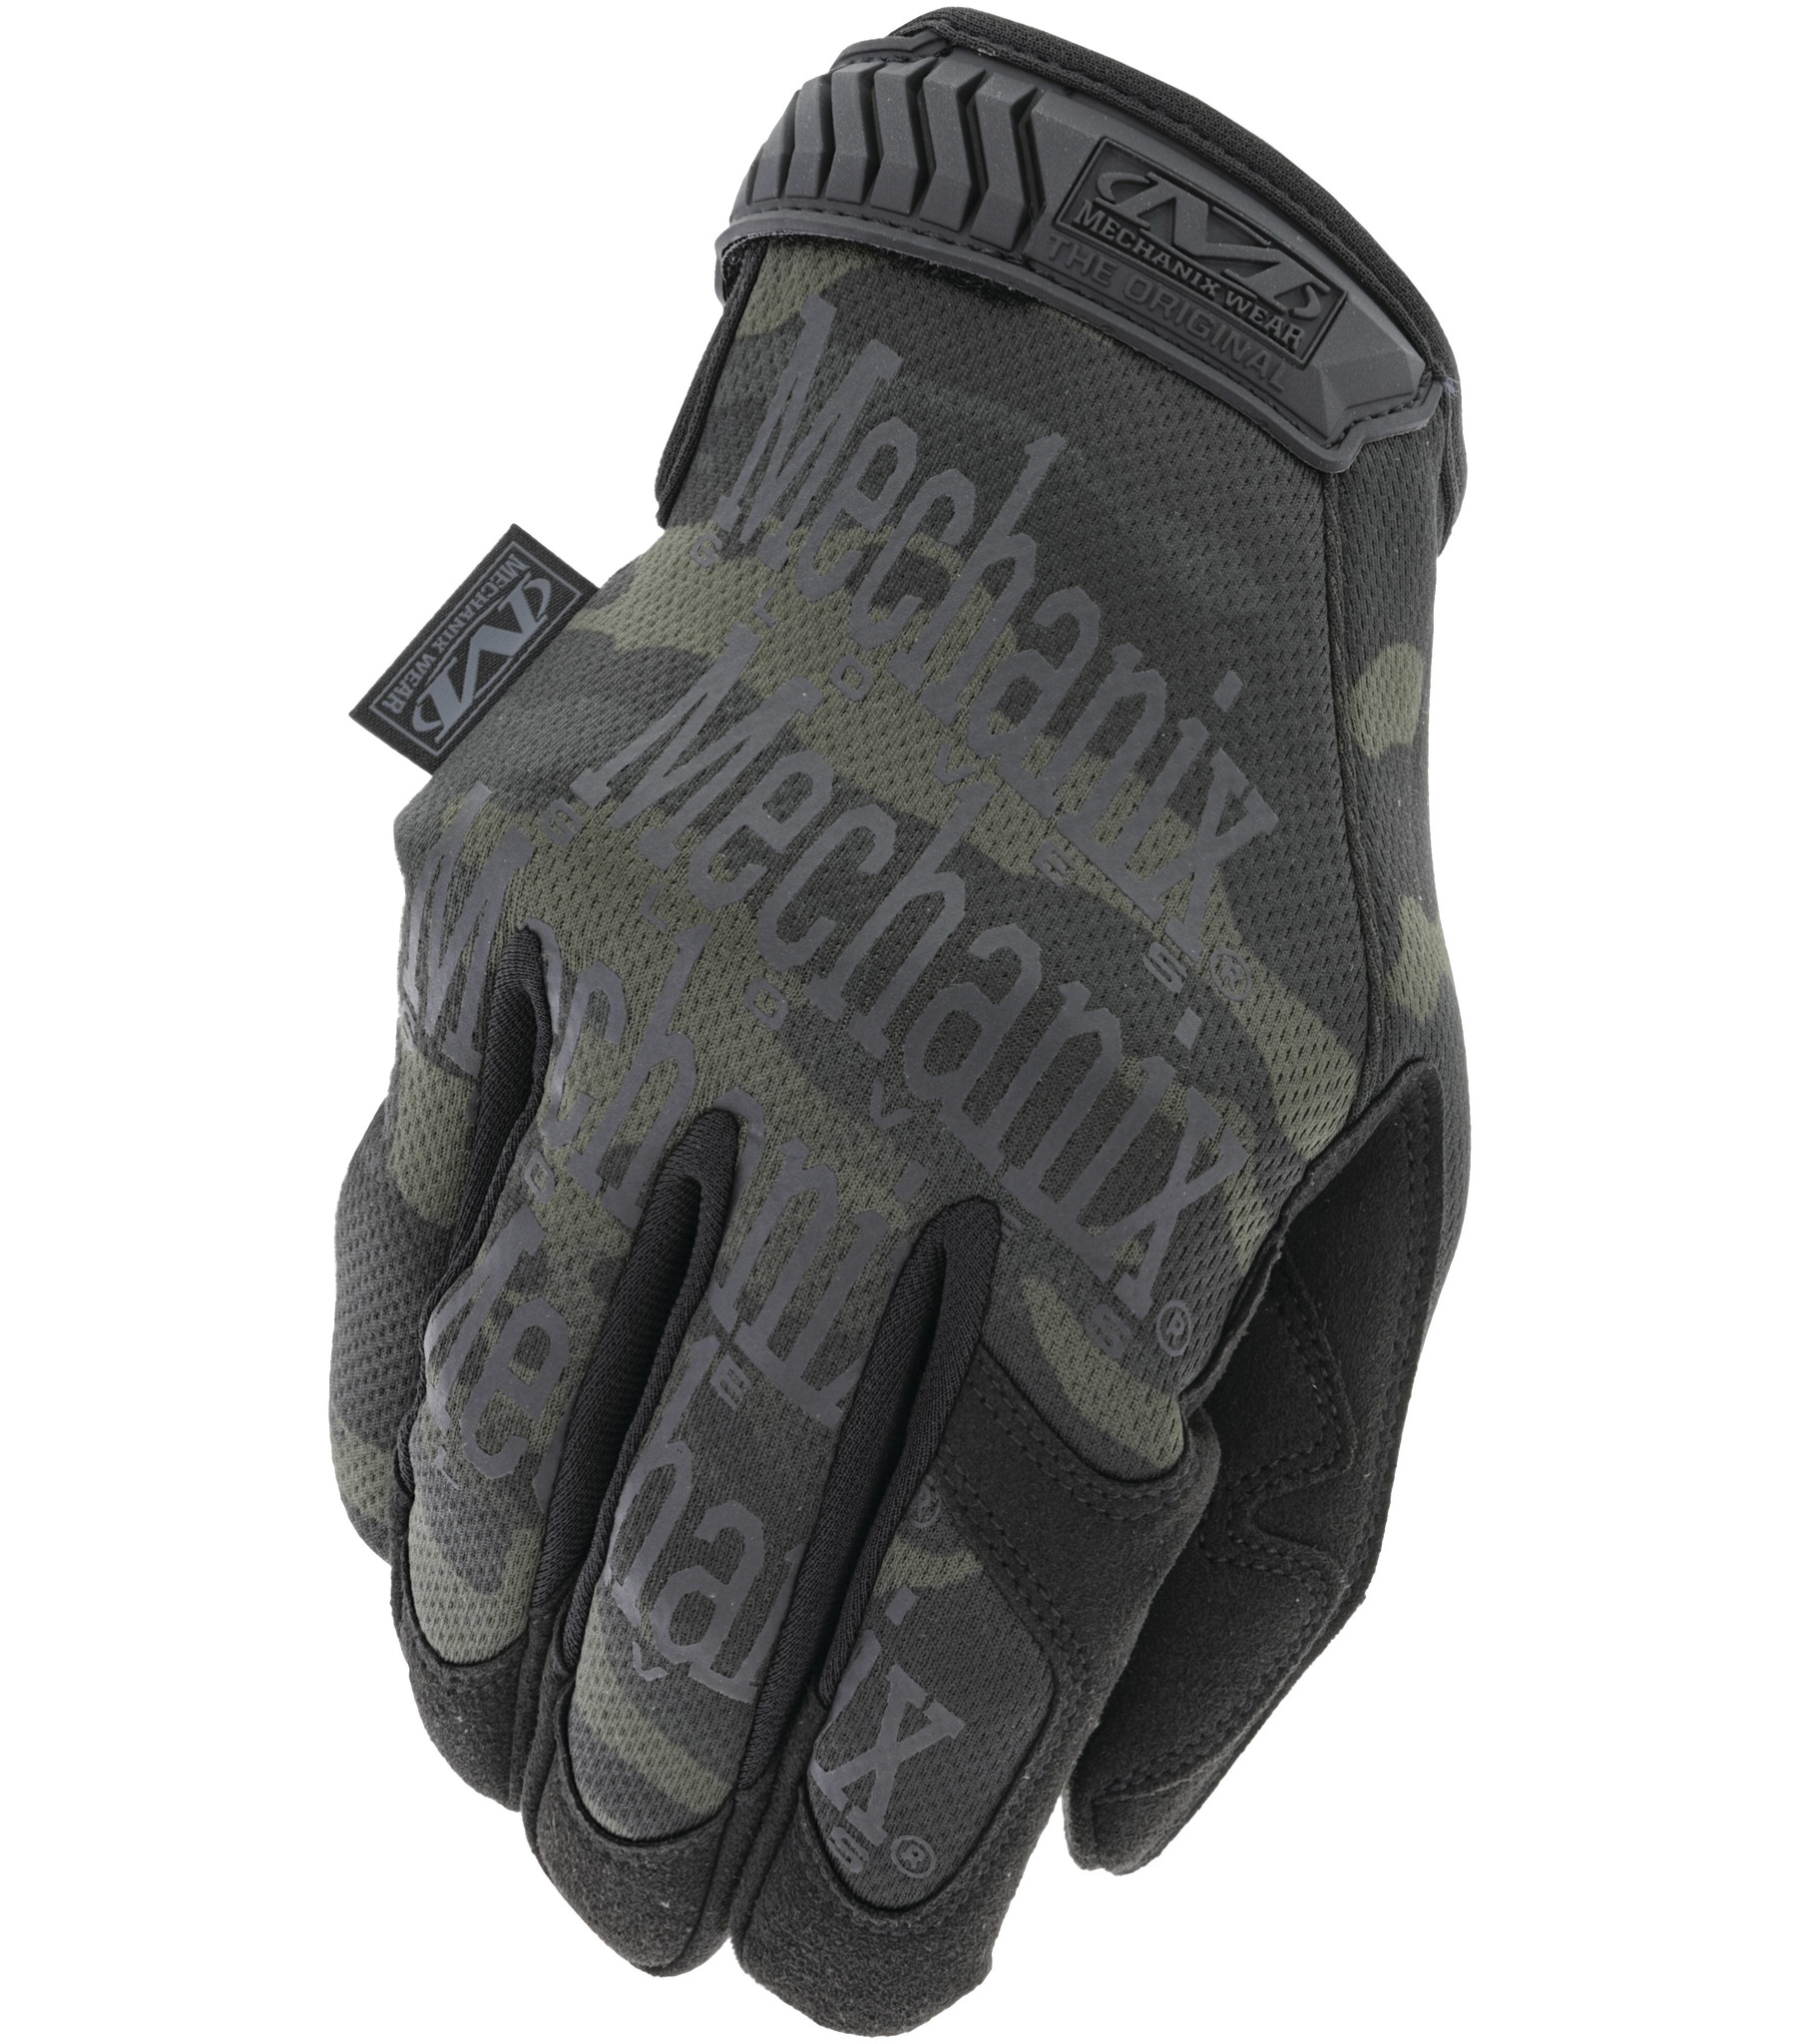 New Mechanix Wear Original Gloves Tactical  Multicam Black MG-68-010 